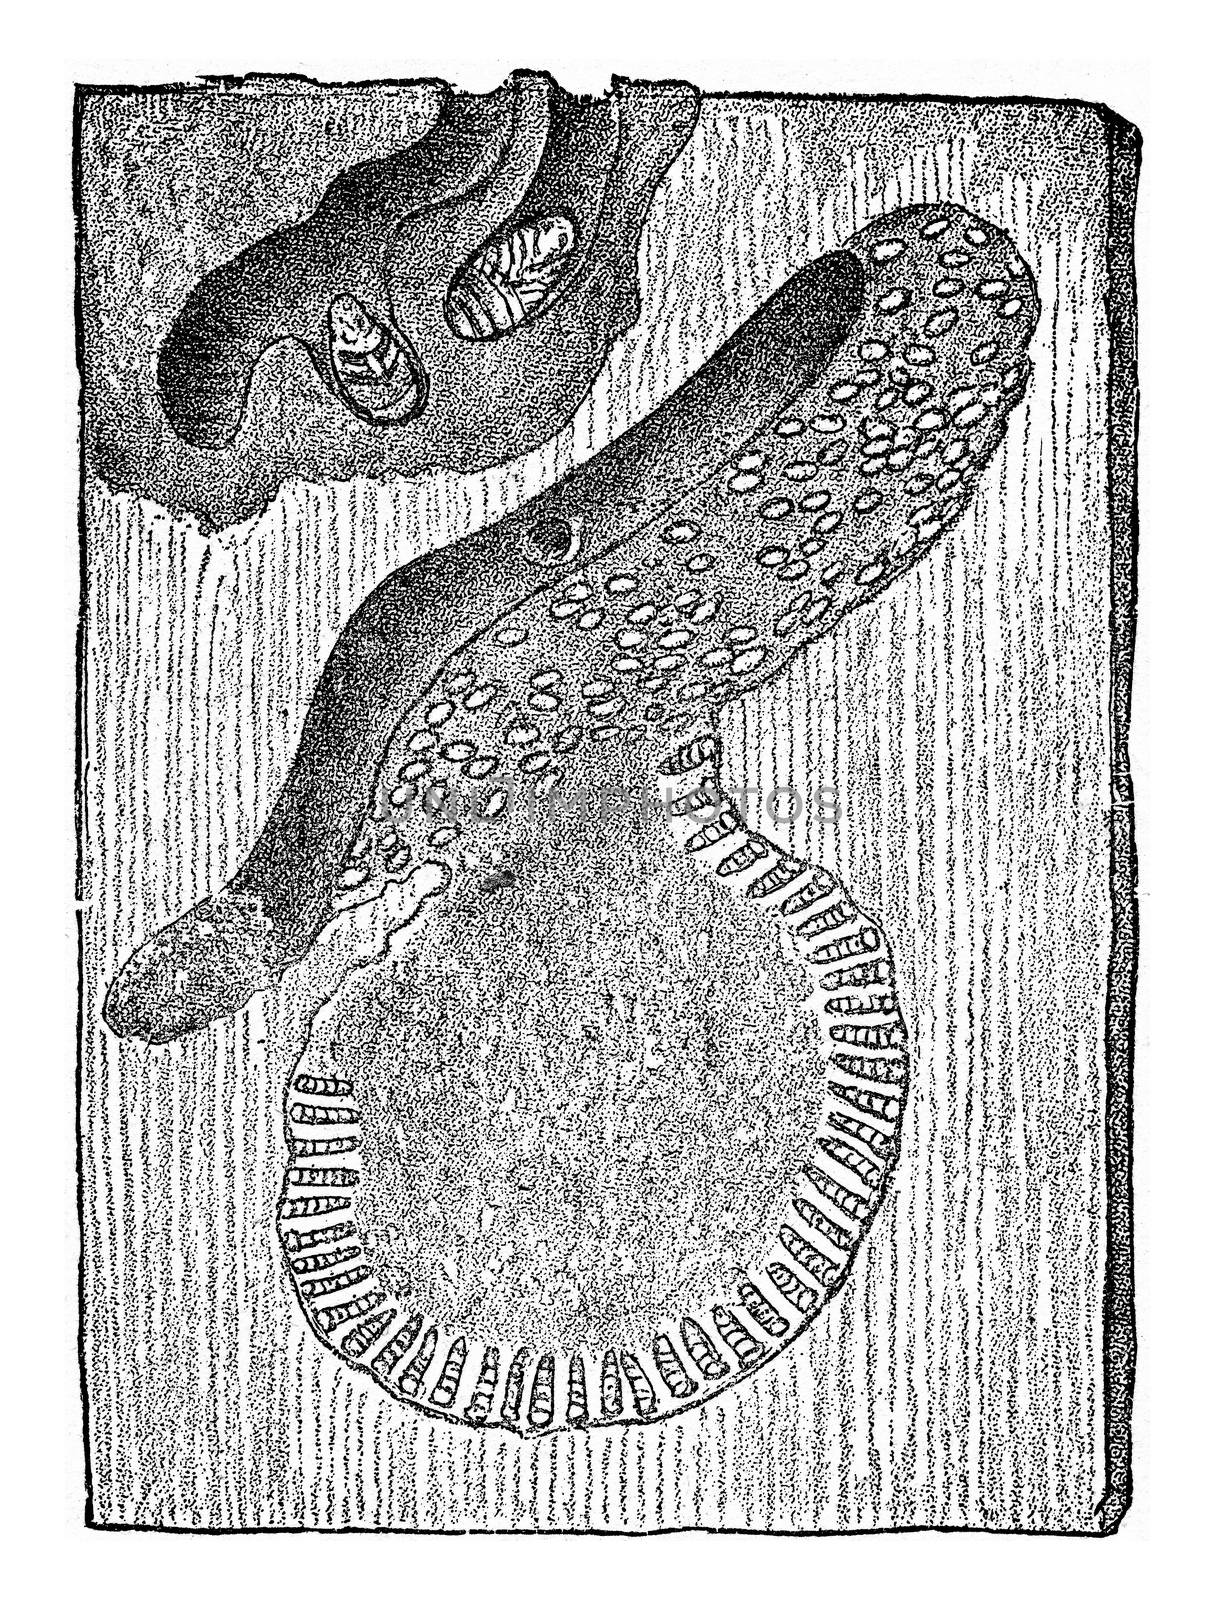 Hylesinus micans, vintage engraved illustration.
